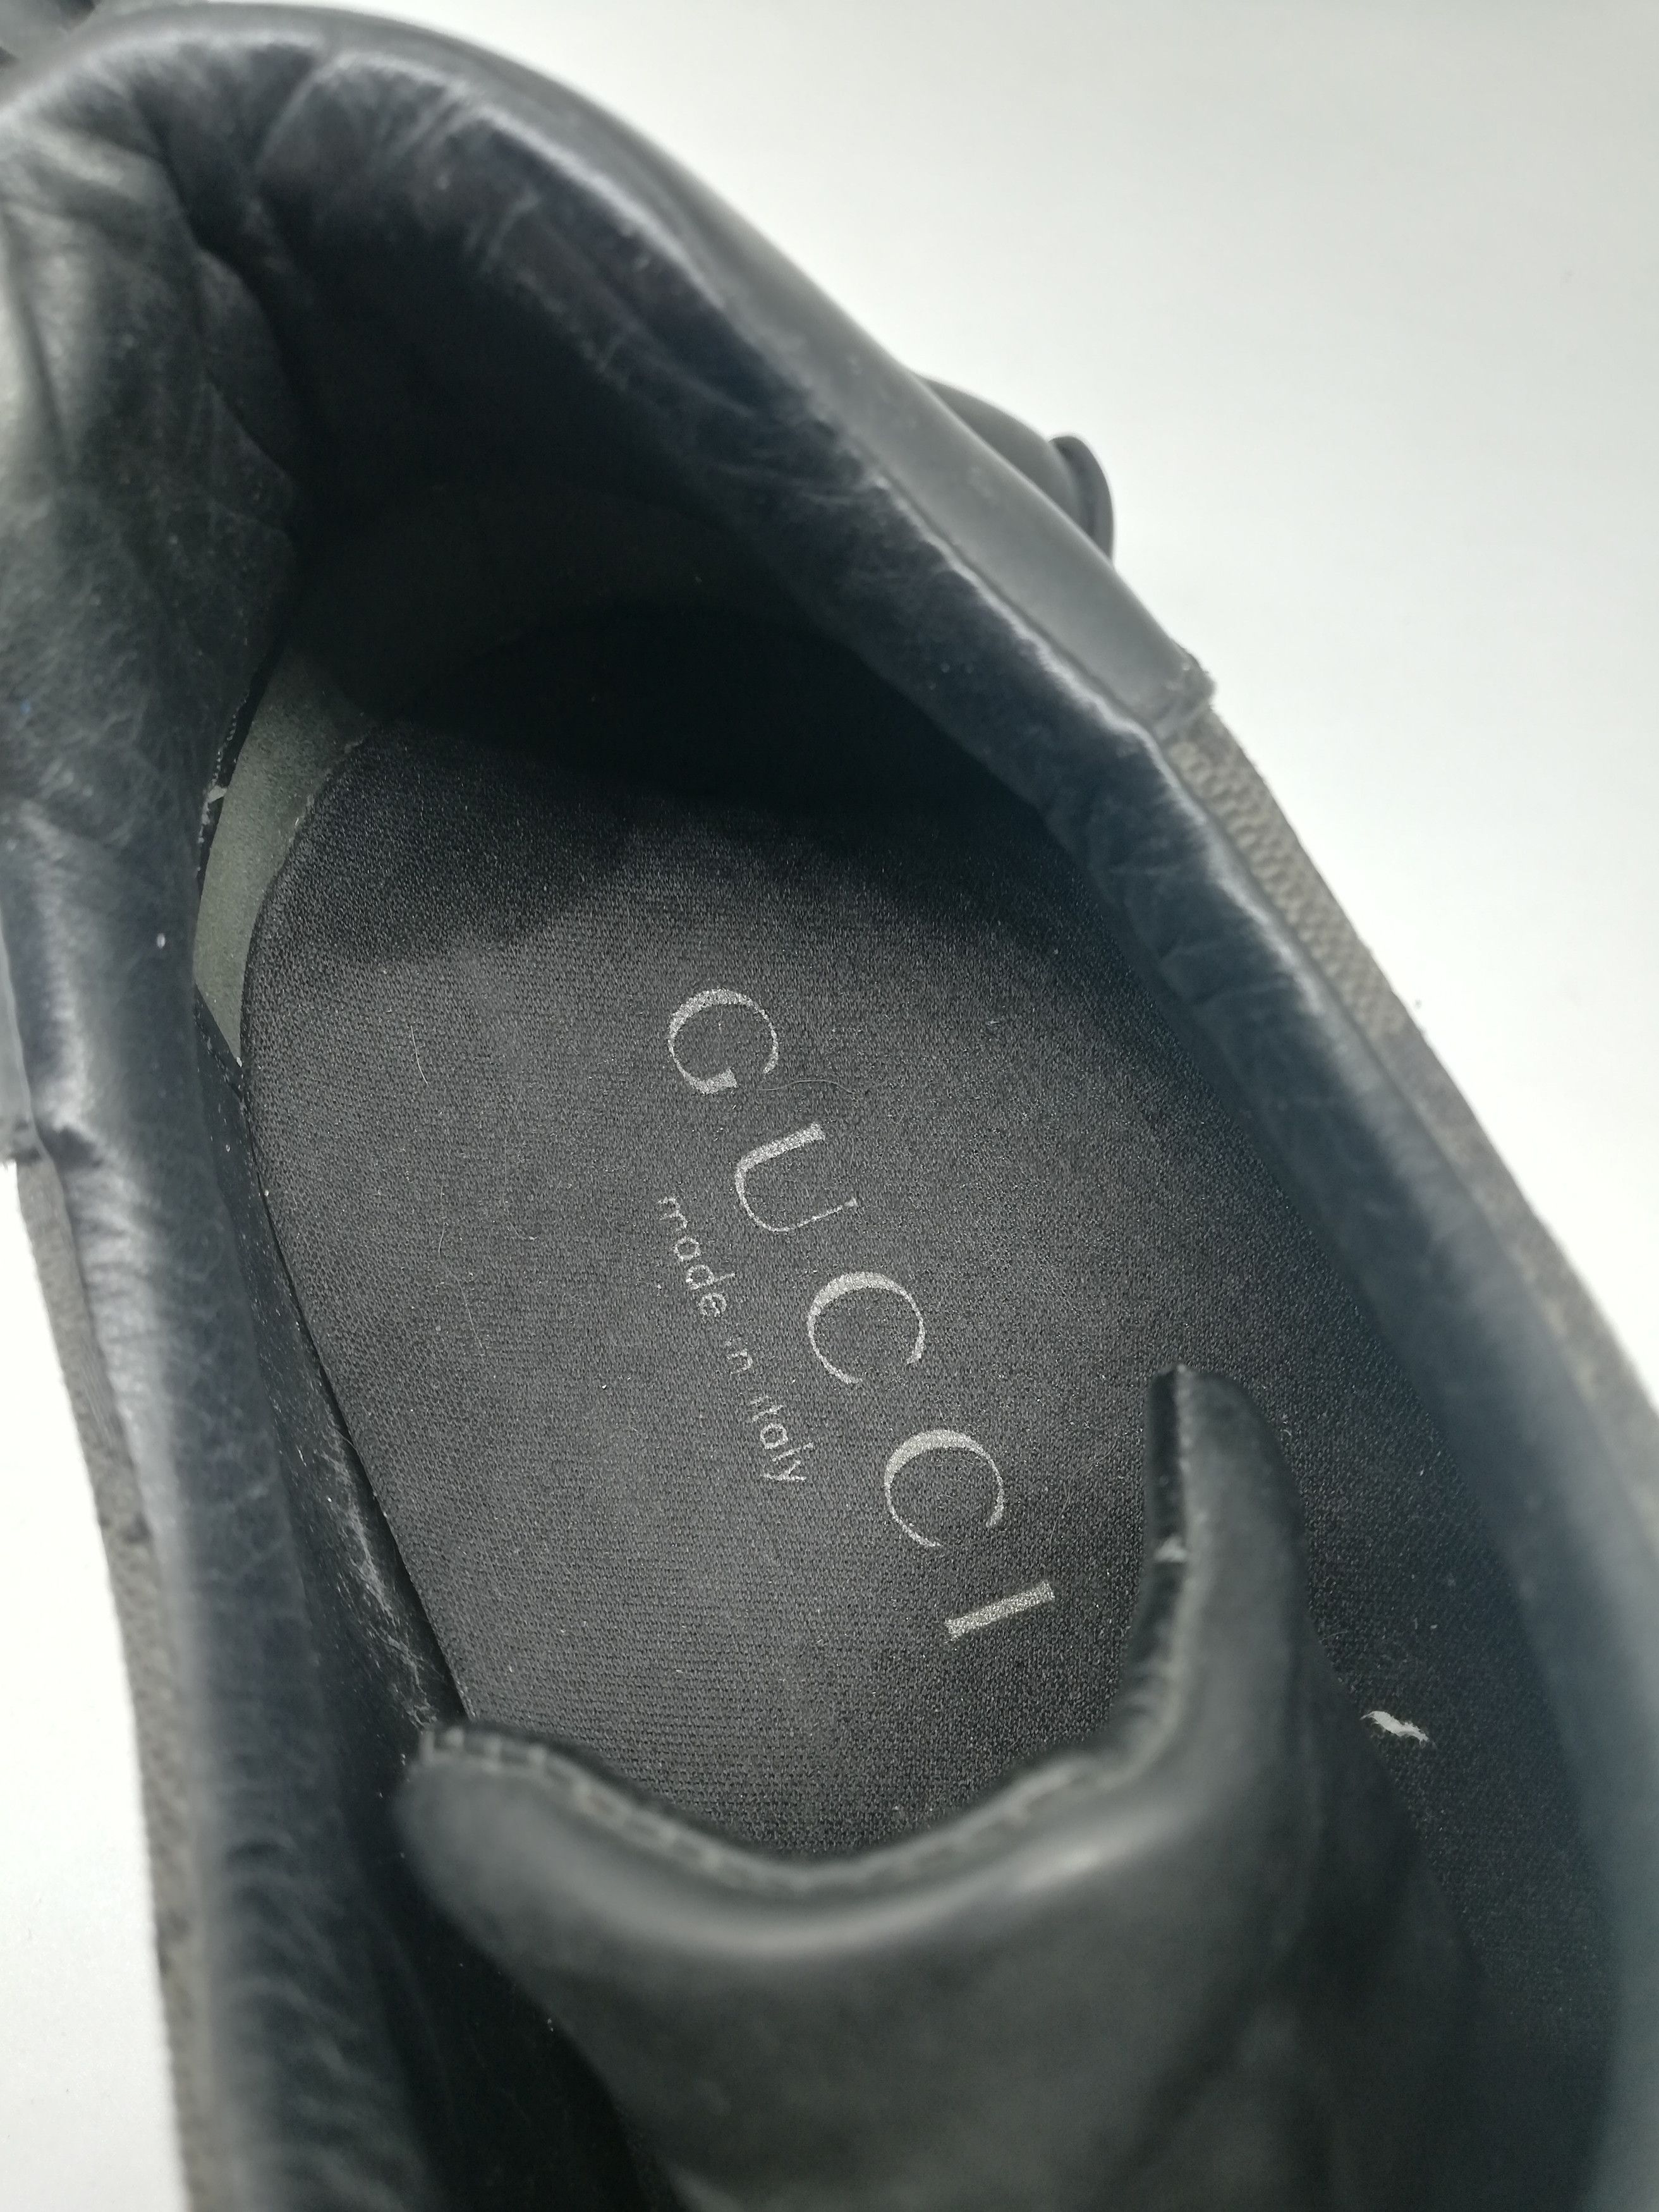 GG Black Velcro Strap Shoes - 9